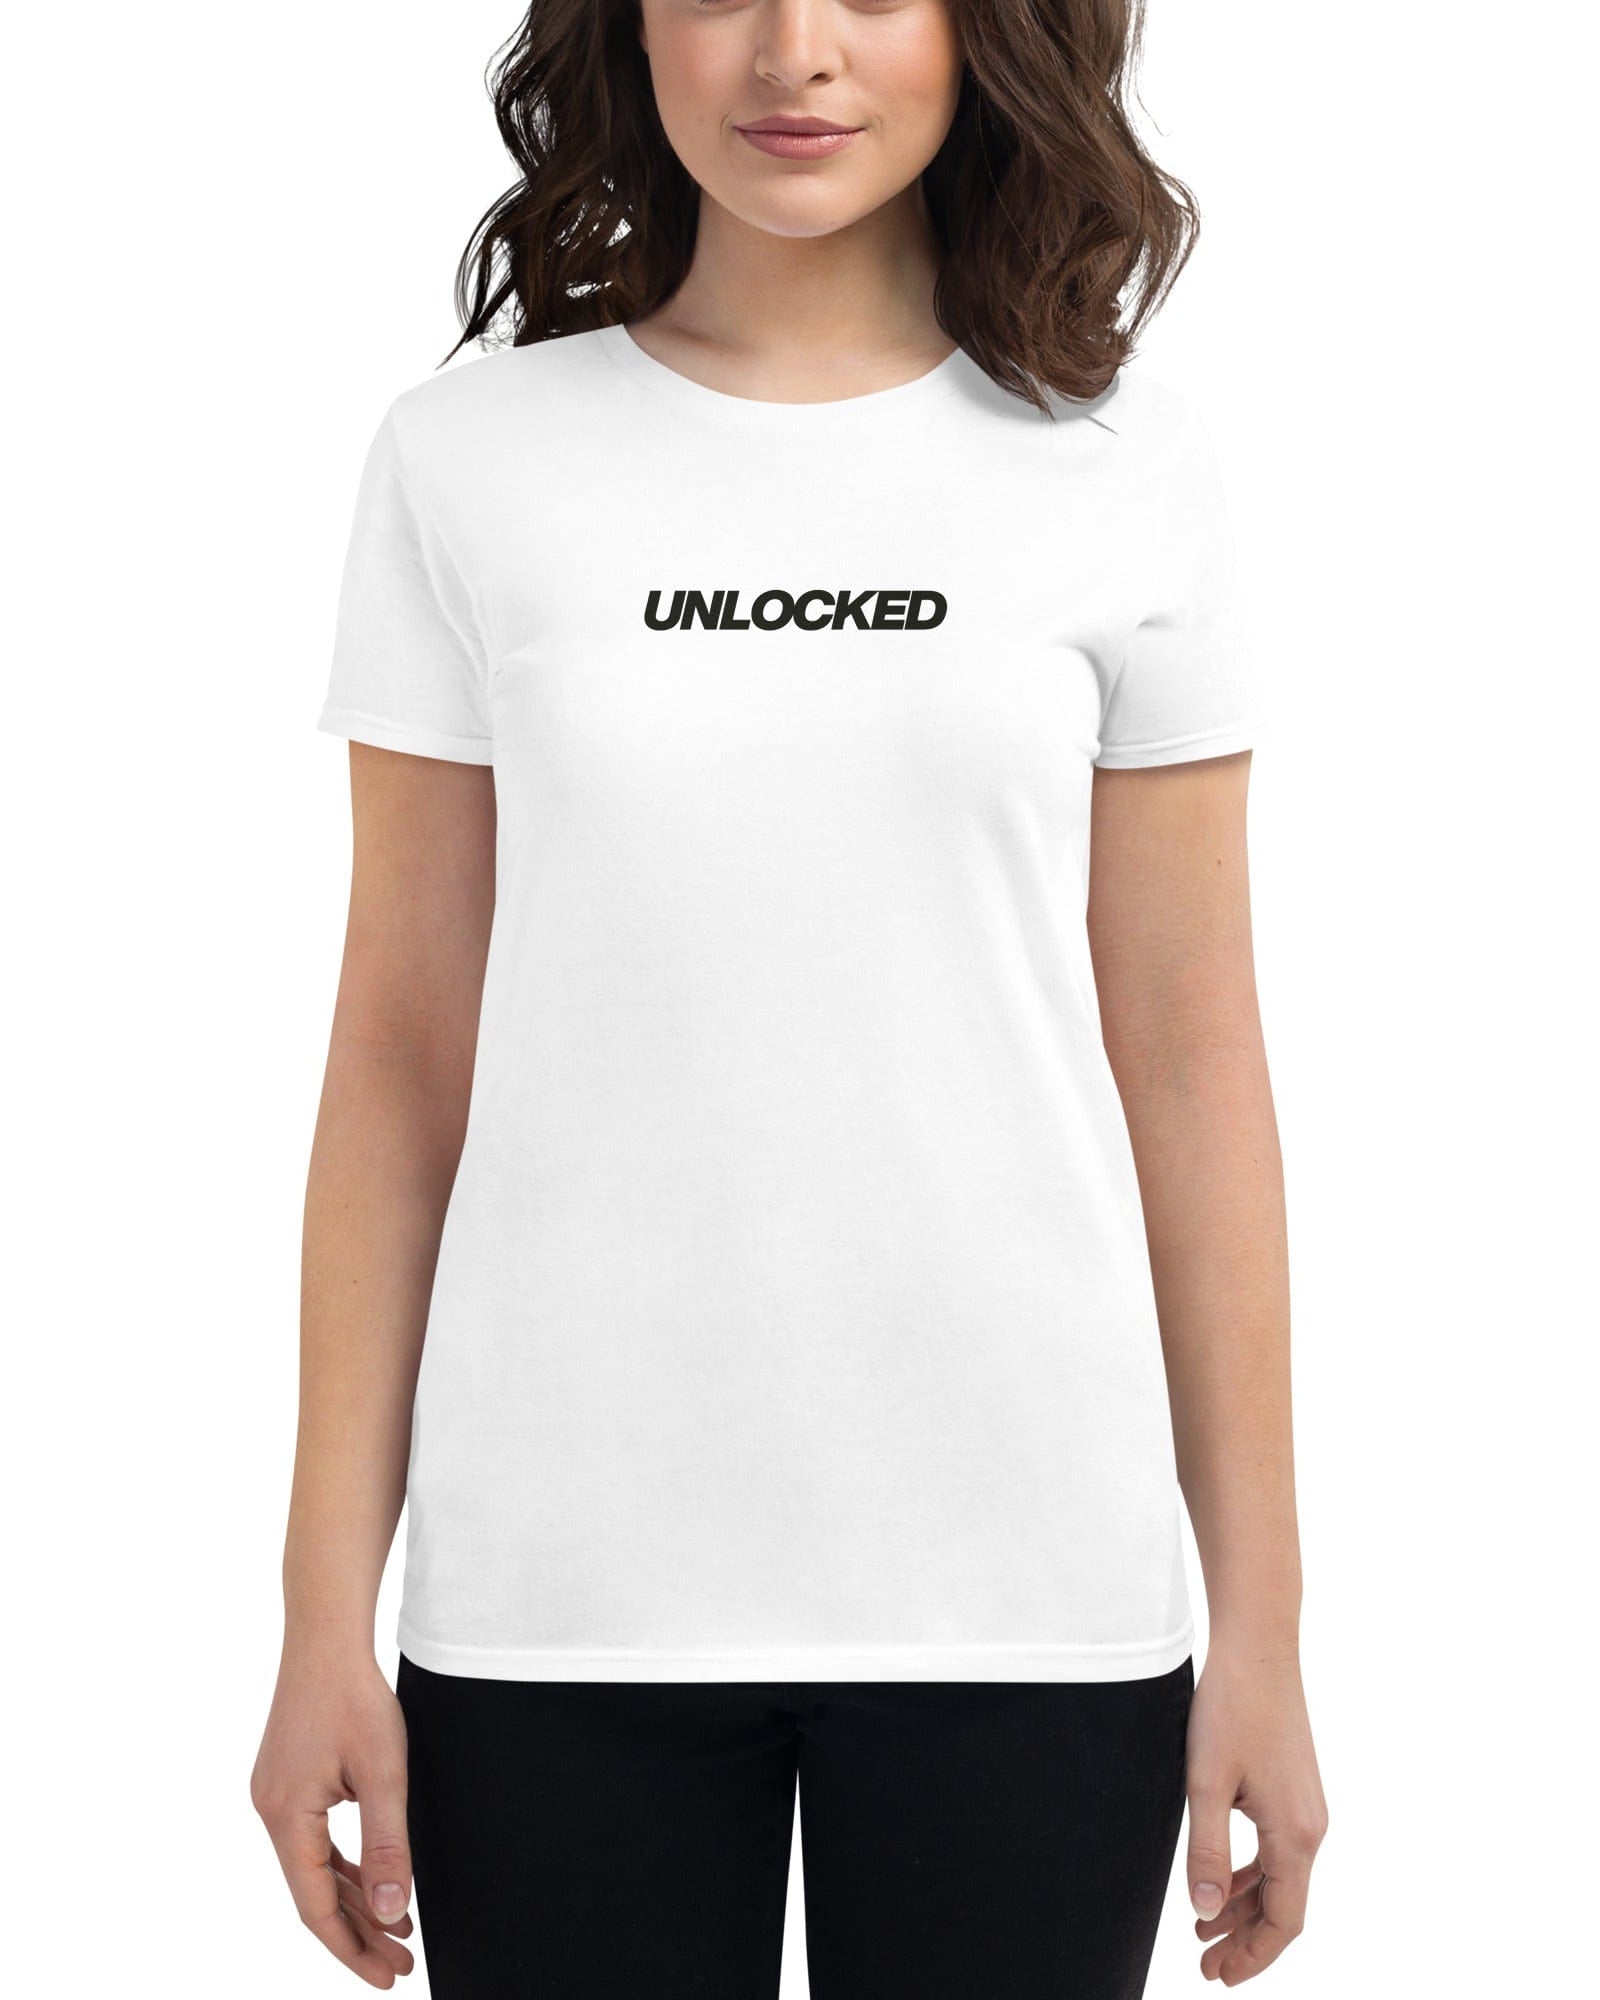 Unlocked Women's Short-Sleeve T-shirt White / S Shirts & Tops Jolly & Goode